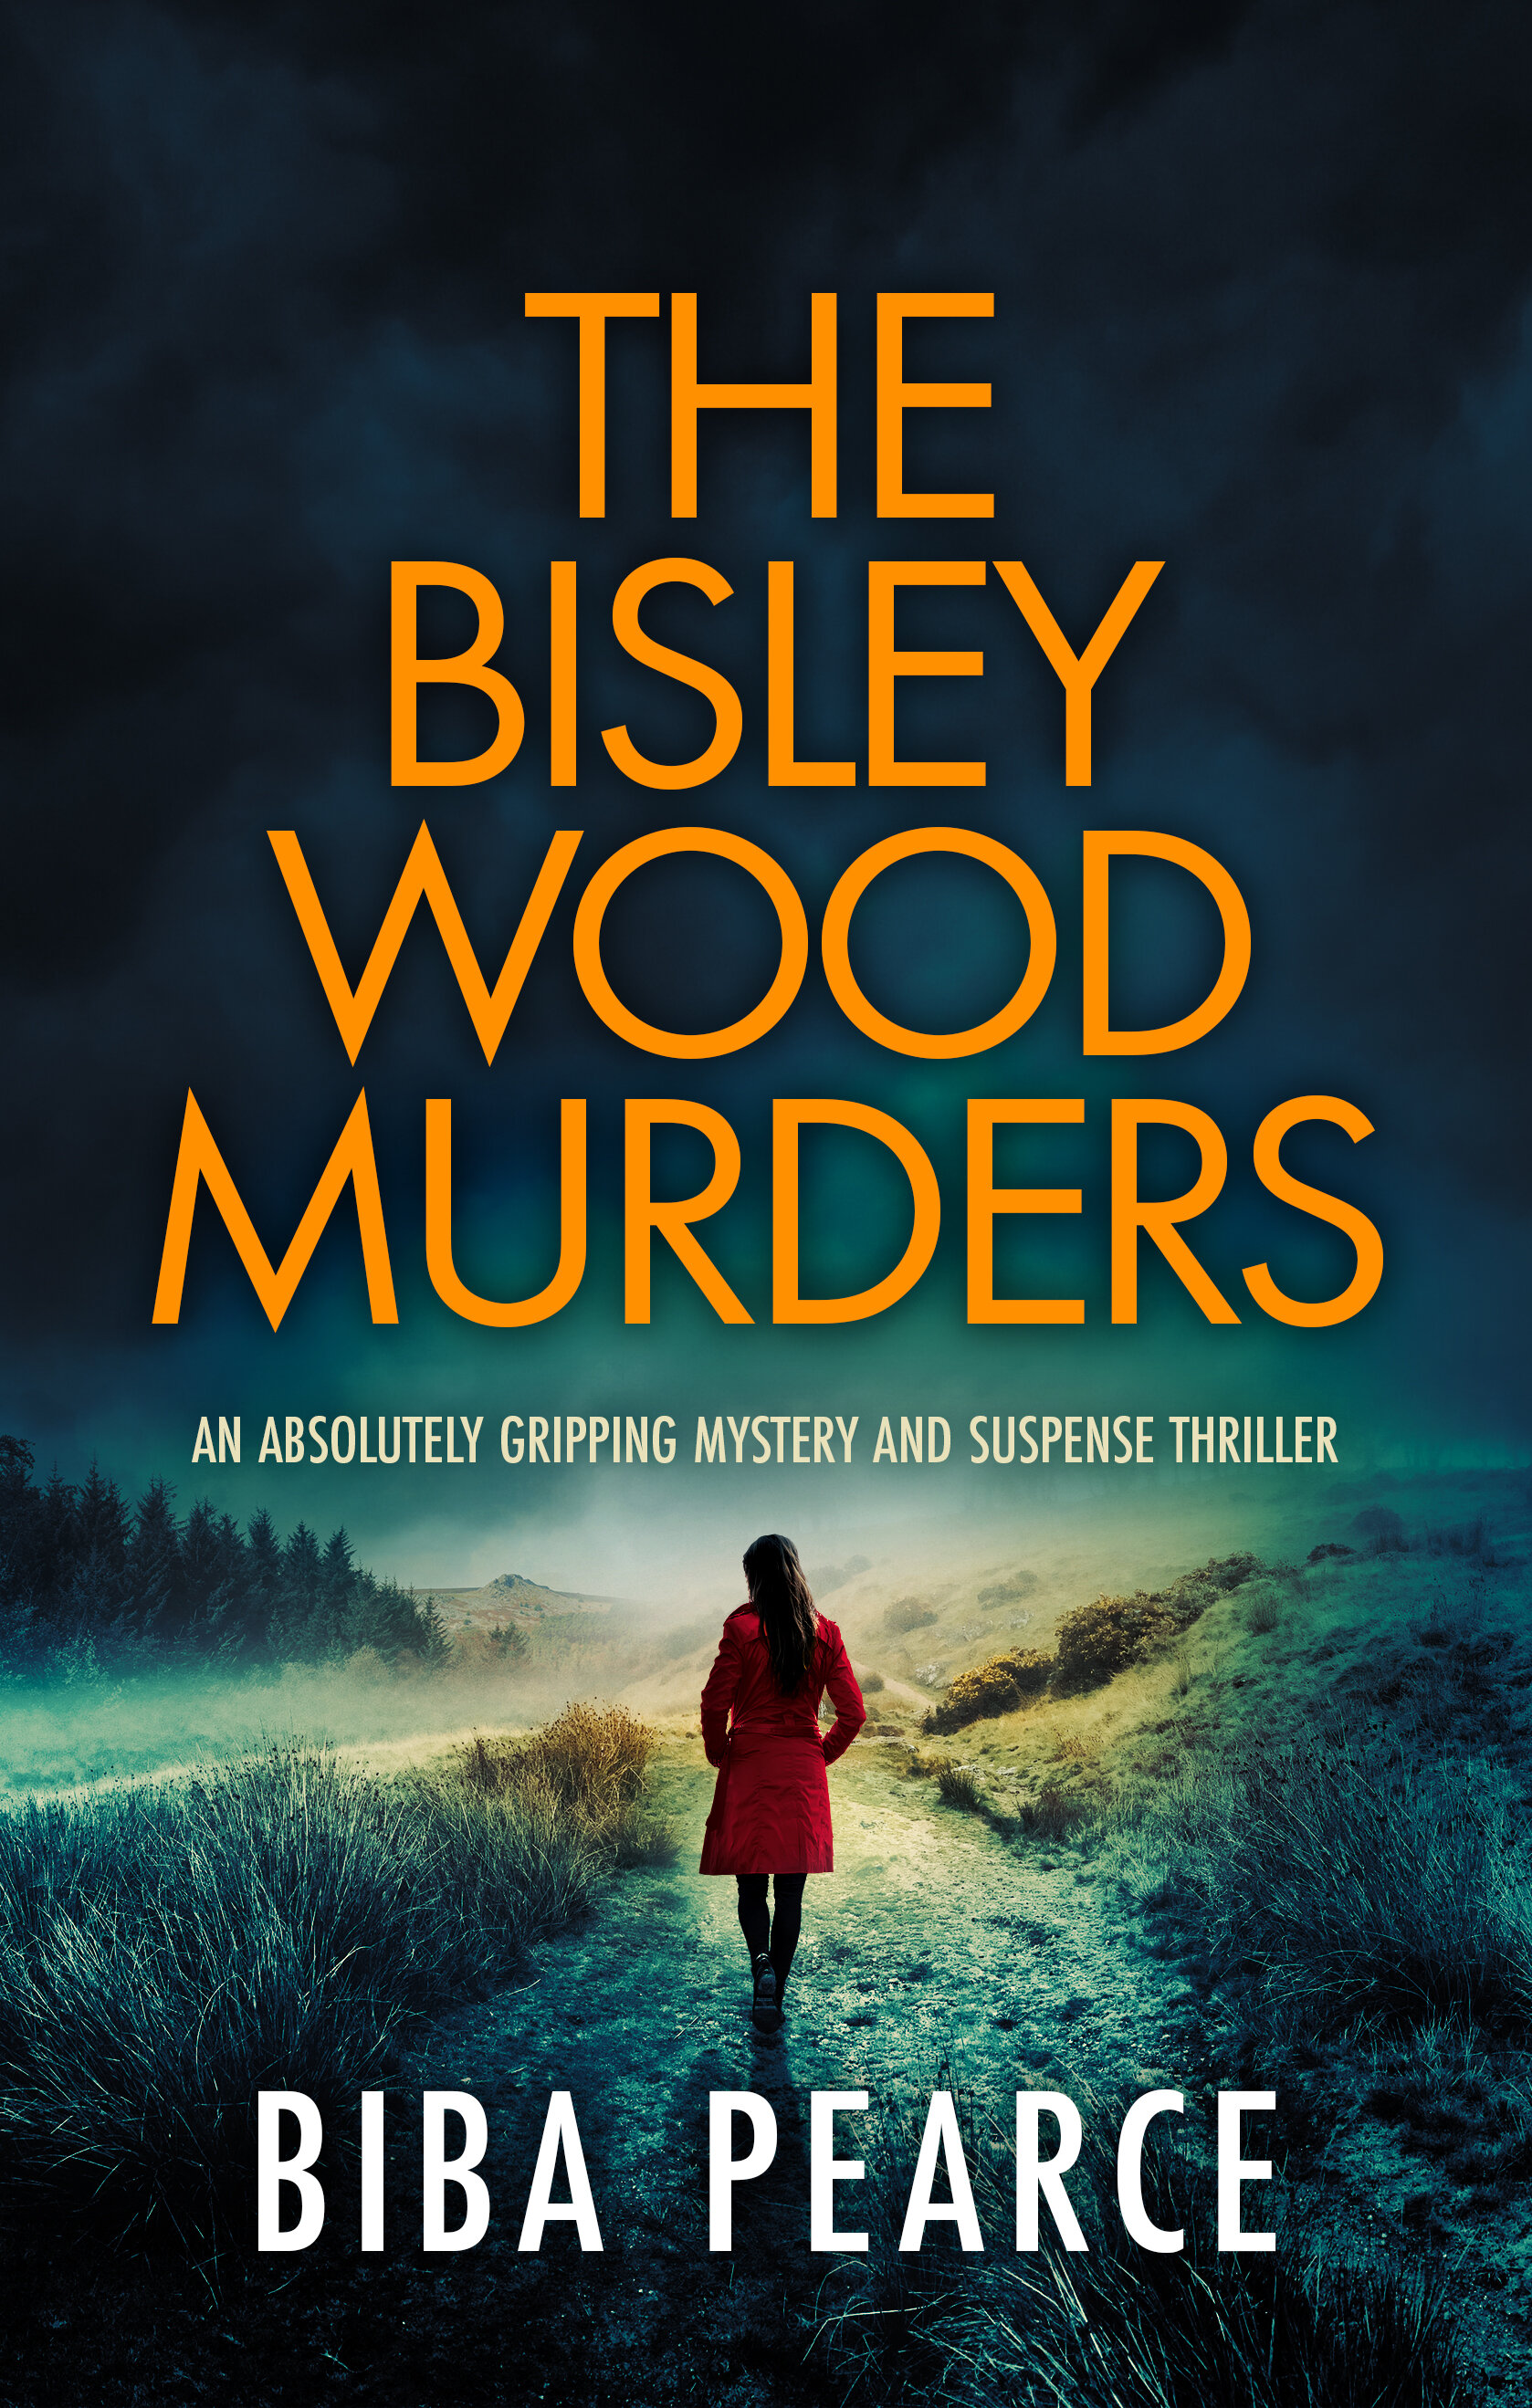 THE BISLEY WOOD MURDERS Publish.jpg